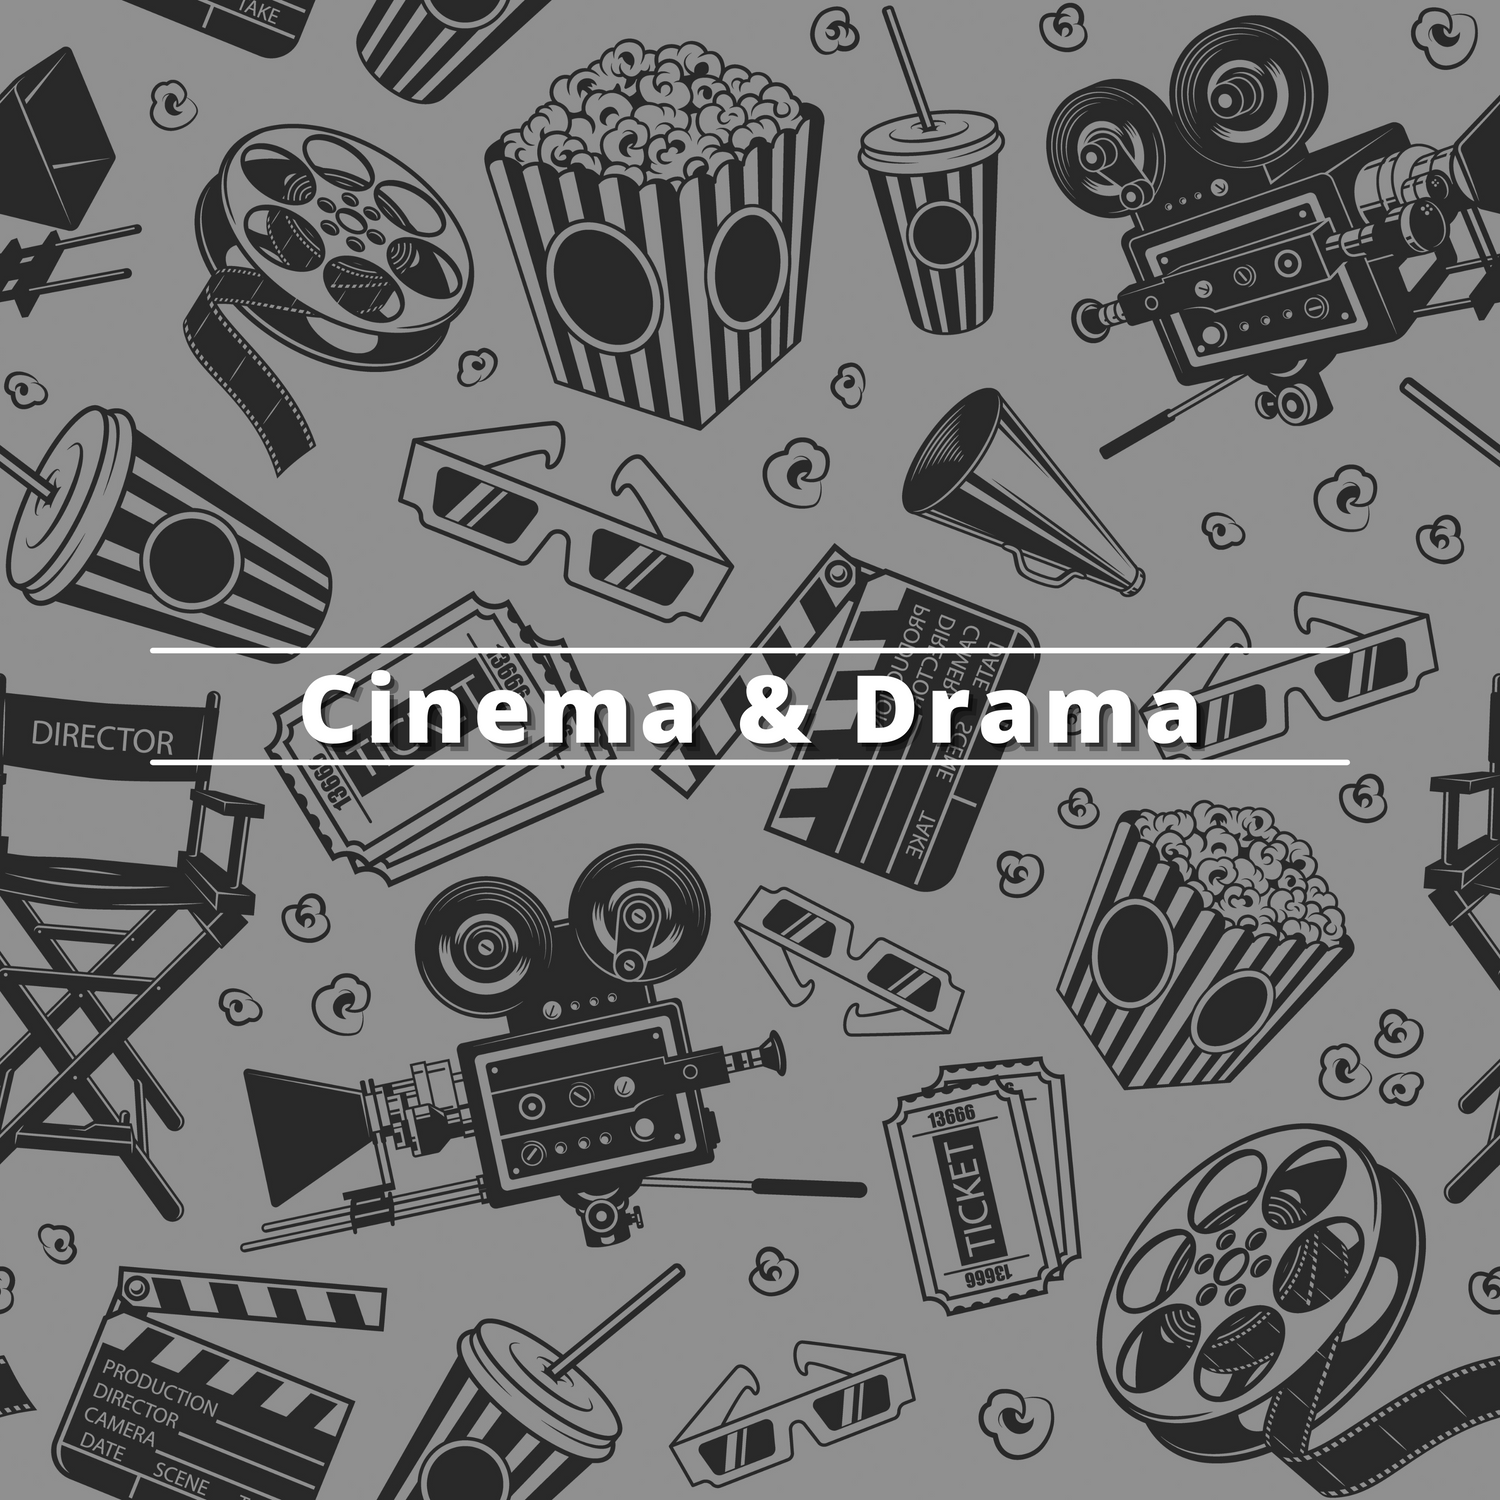 Cinema & Drama